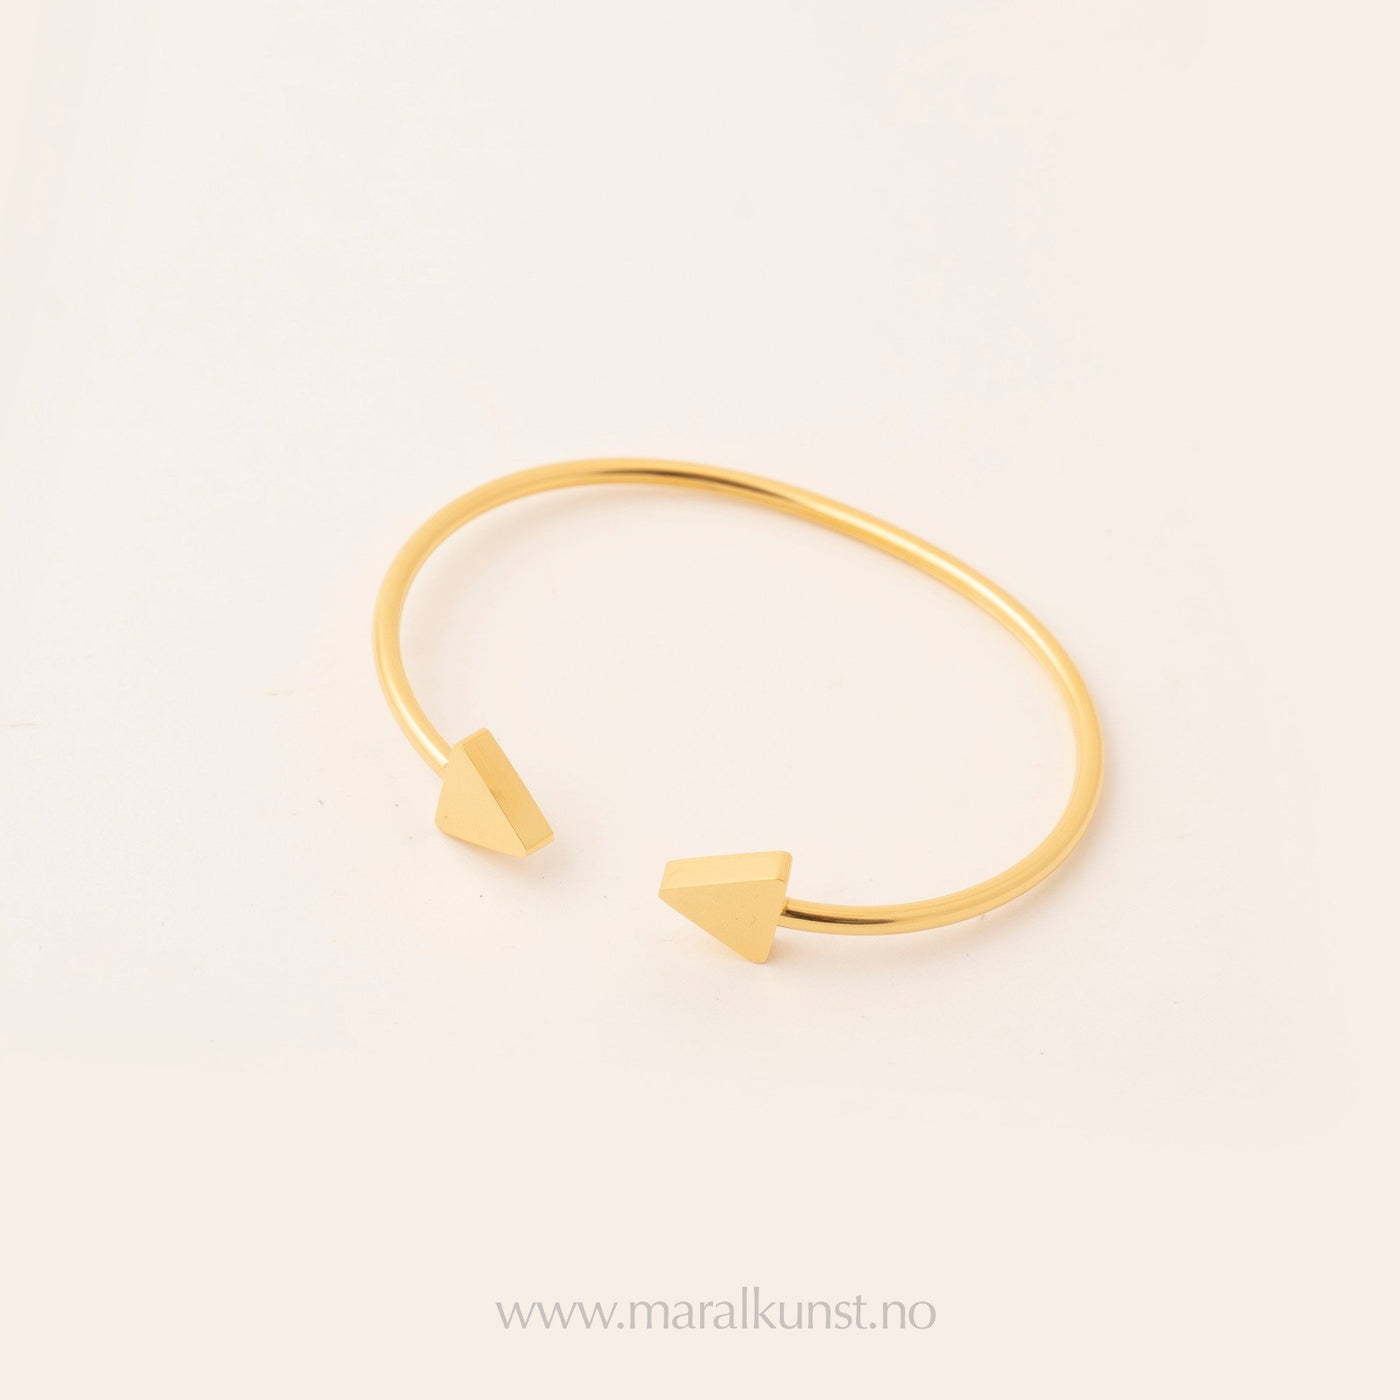 Sofia Gold Cuff Bracelet - Maral Kunst Jewelry